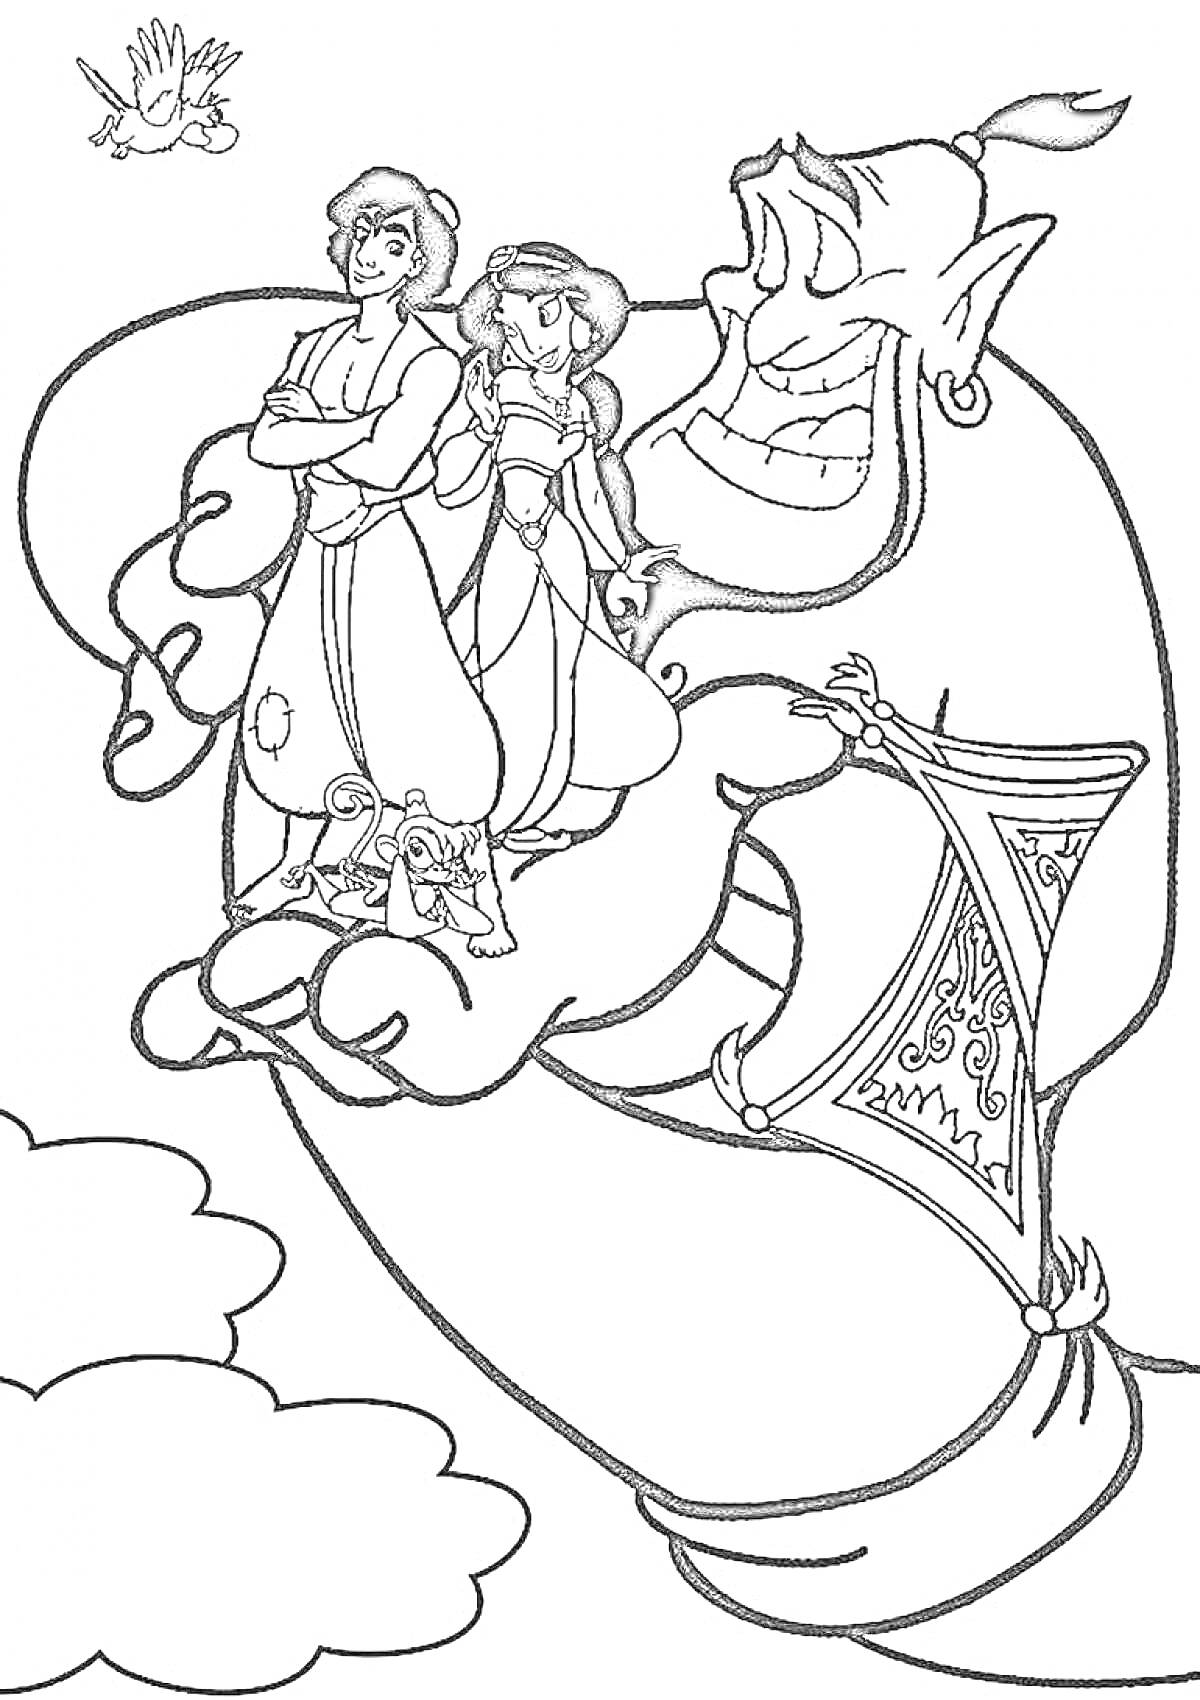 Алладин и Жасмин стоят на руке Джинна с ковром-самолетом, птица летит в небе